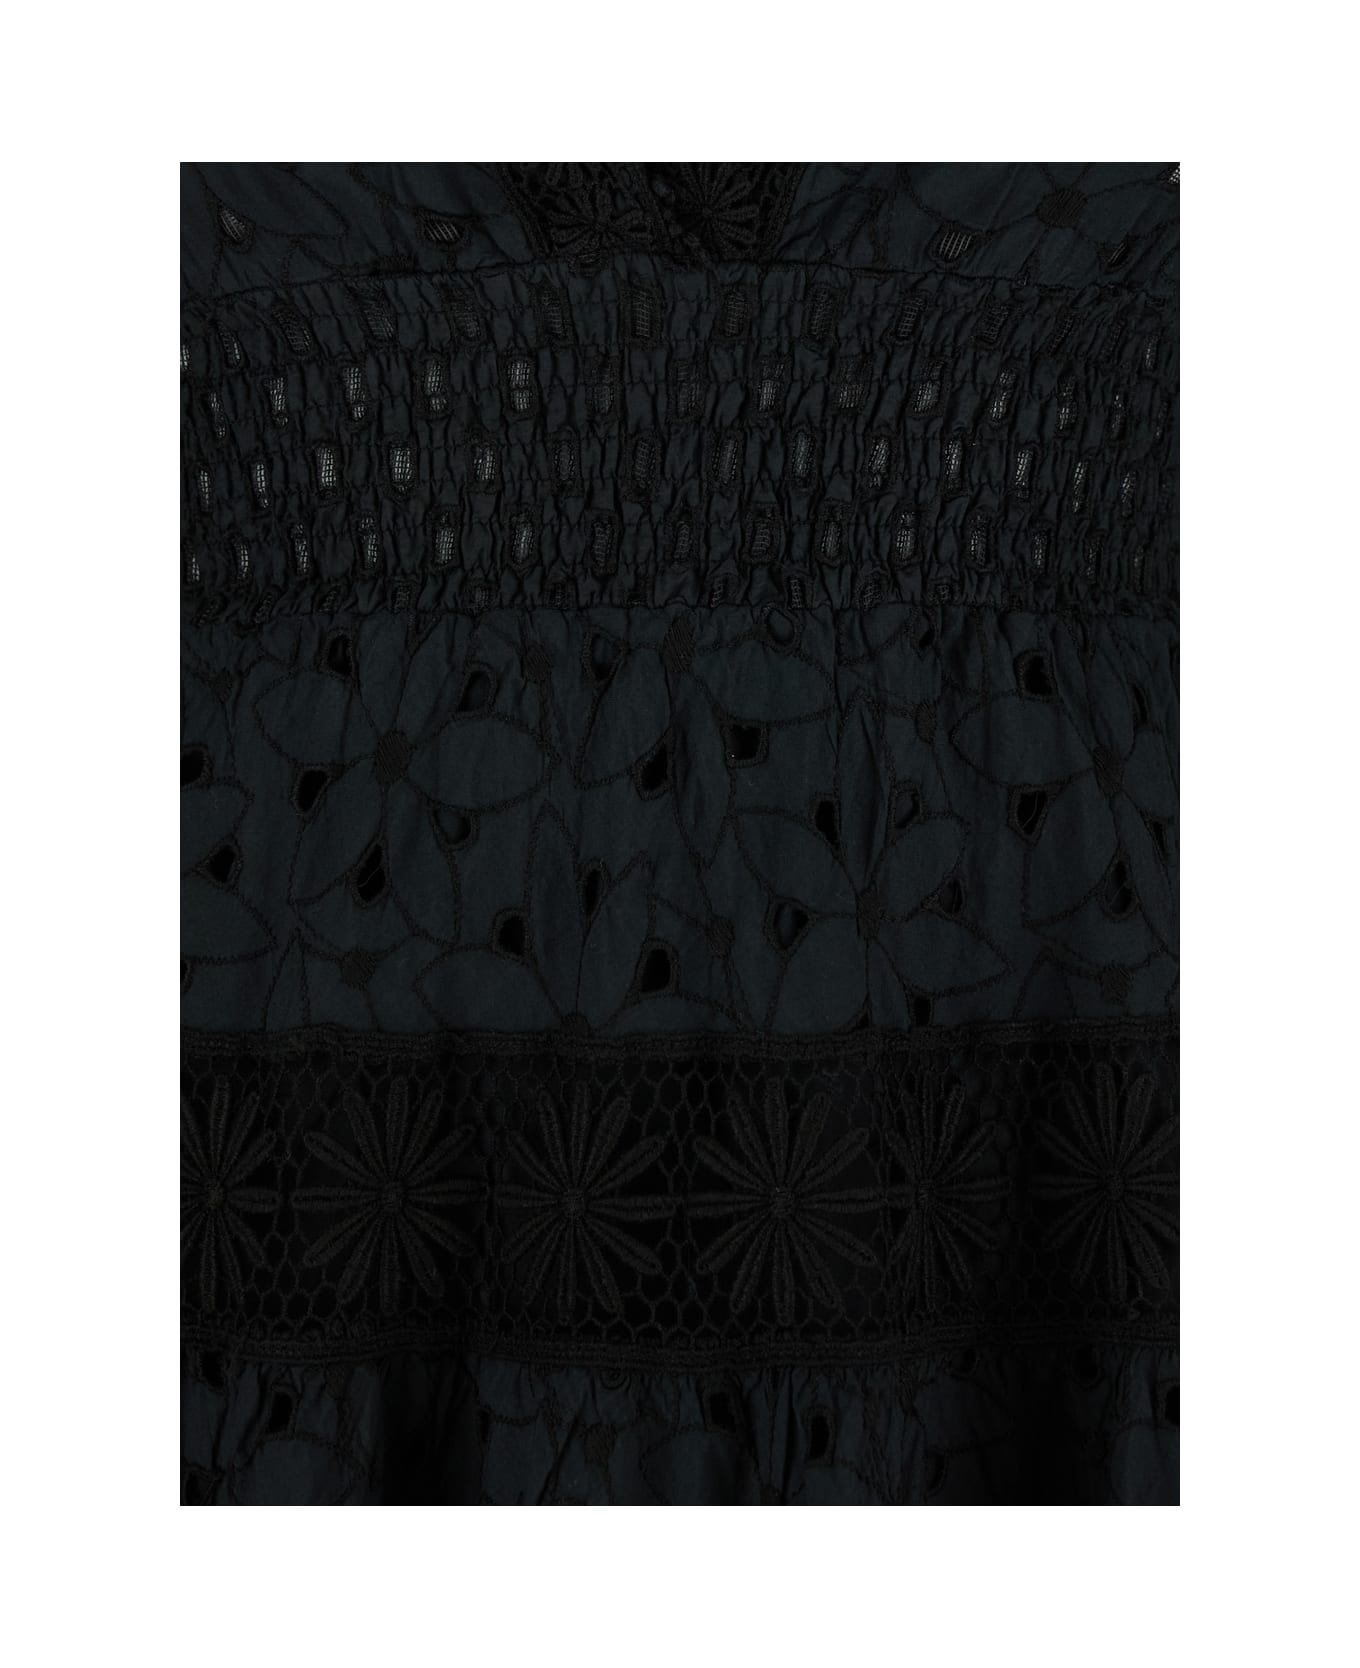 Temptation Positano Embroidered Dress - Black